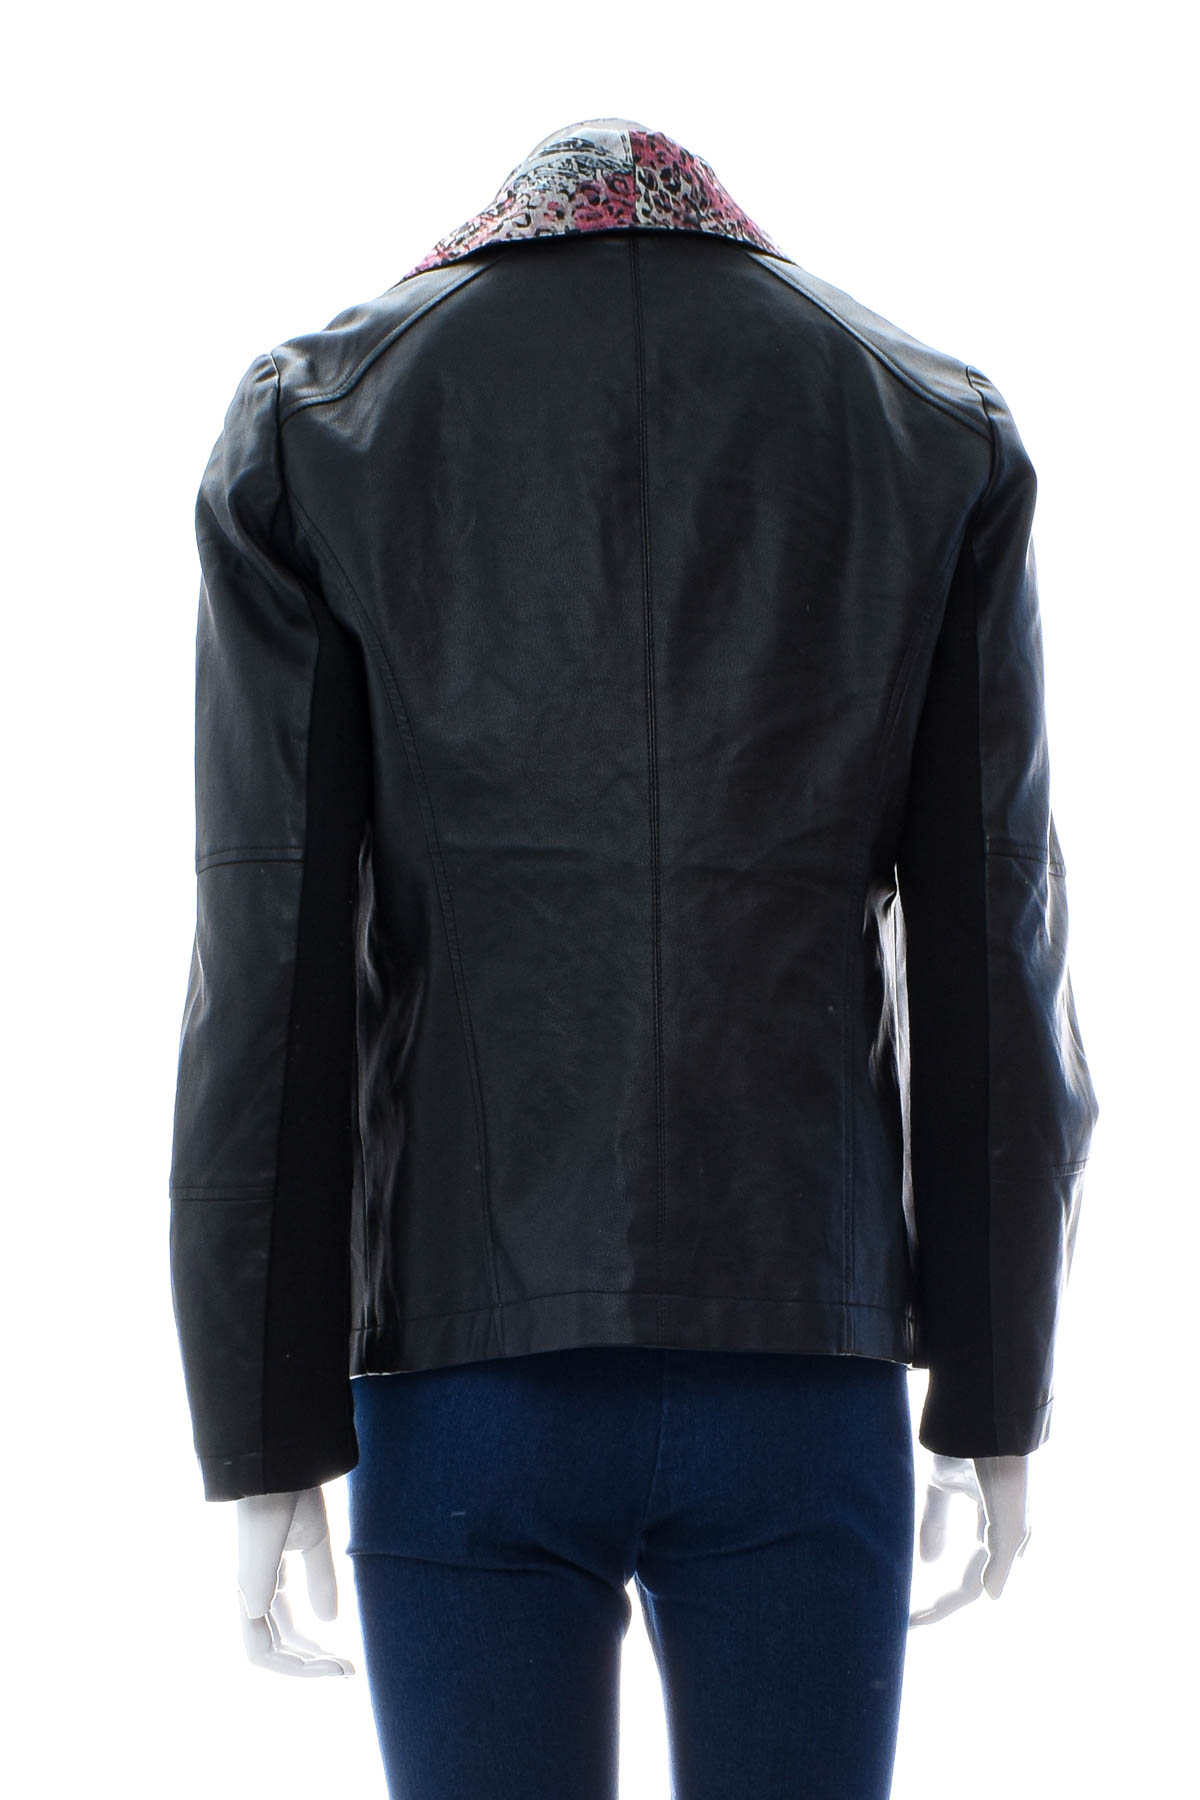 Women's leather jacket - Maloo - 1